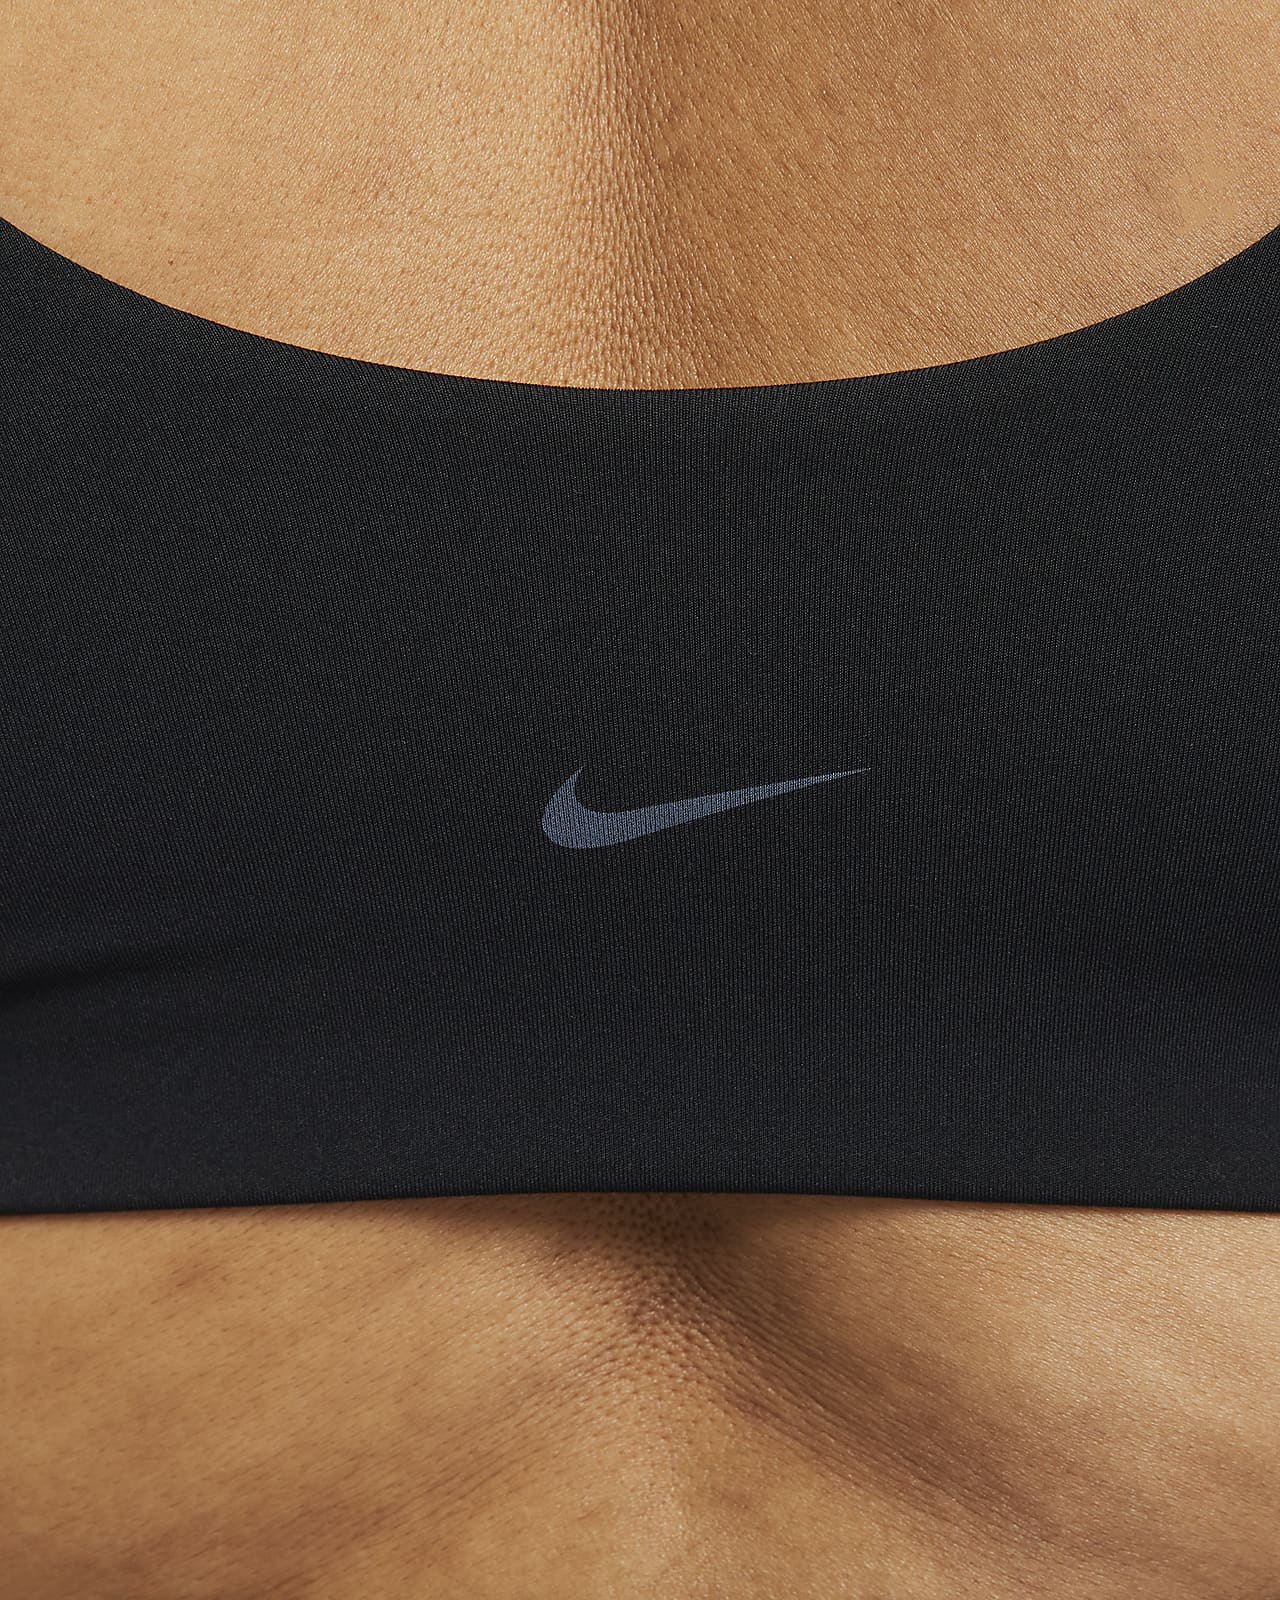 Nike Alate All U Women's Light-Support Lightly Lined U-Neck Sports Bra